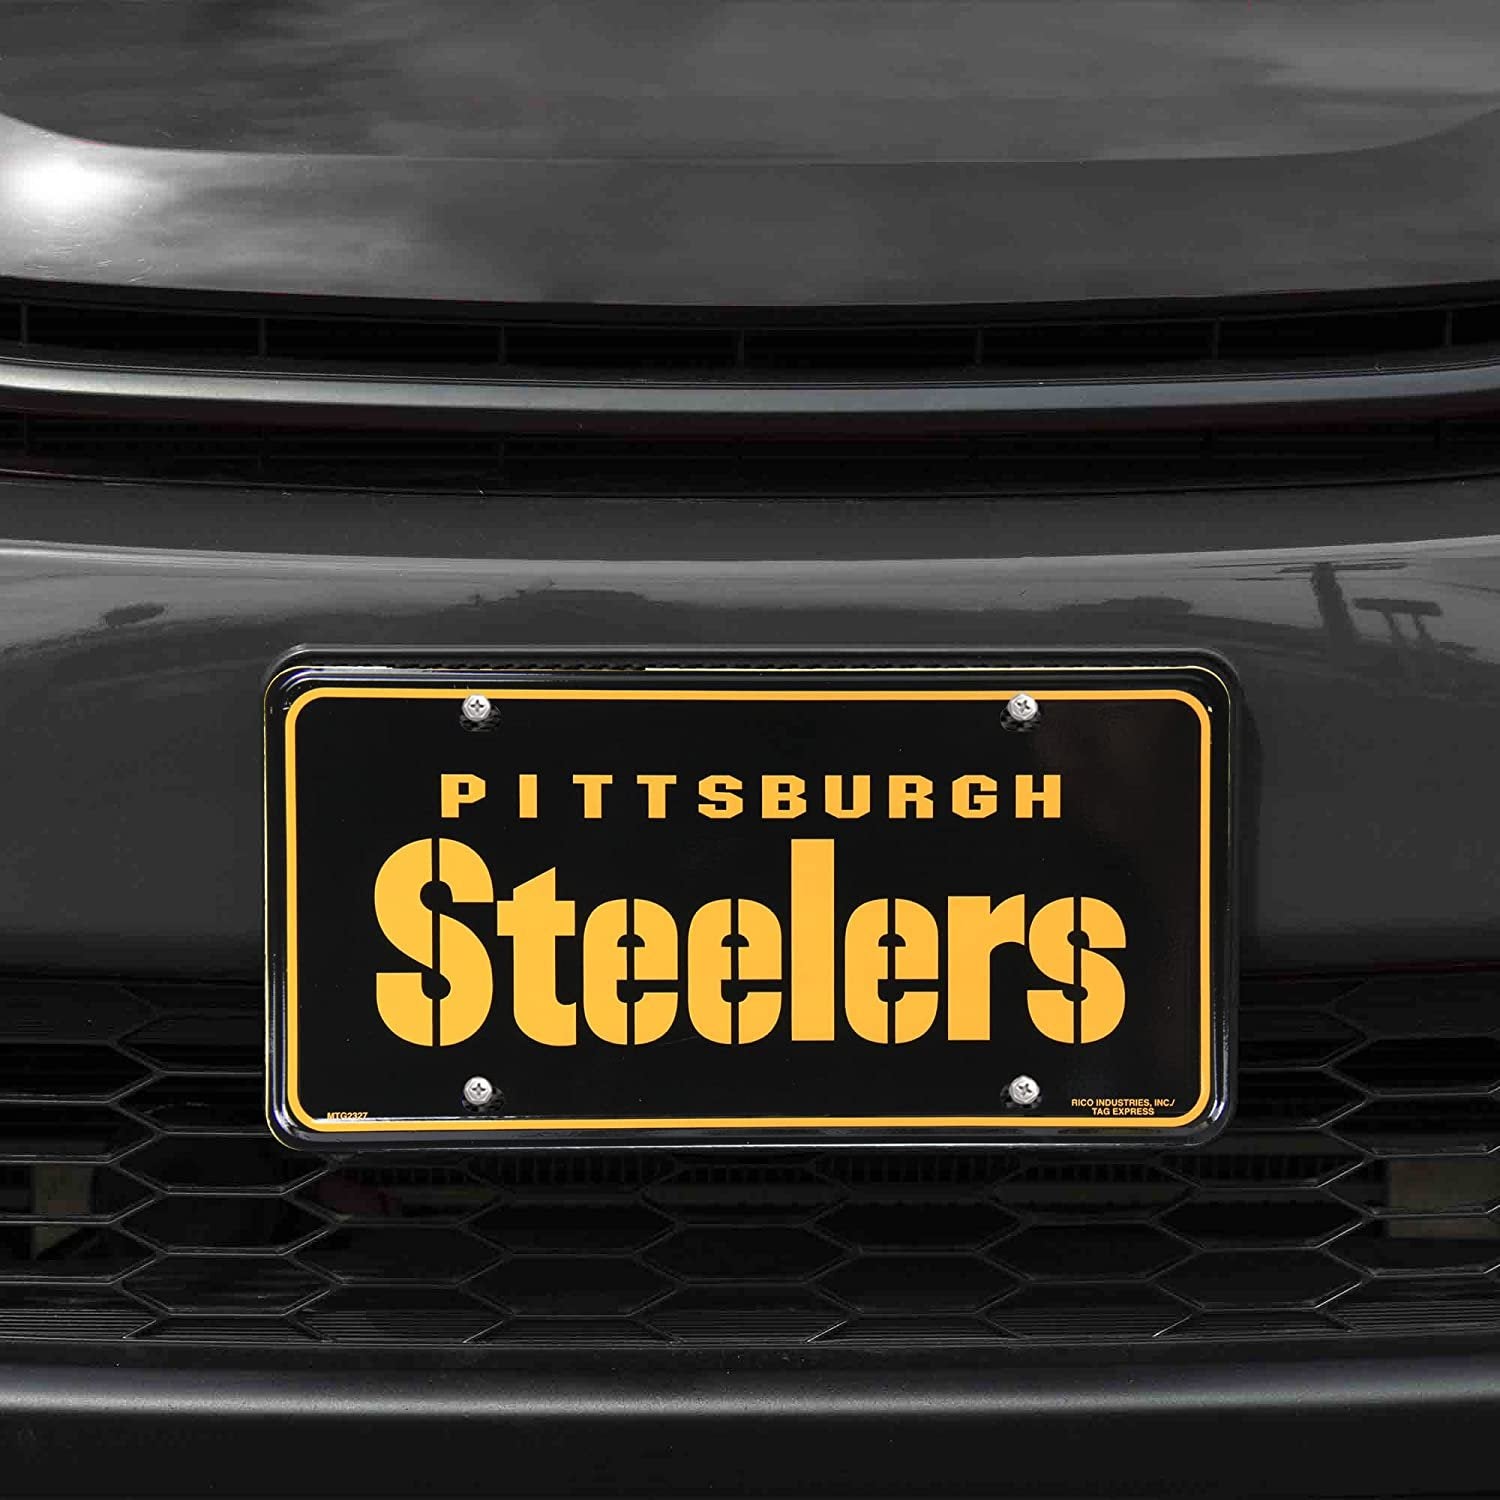 Pittsburgh Steelers Metal Auto Tag License Plate, Script Black Design, 12x6 Inch